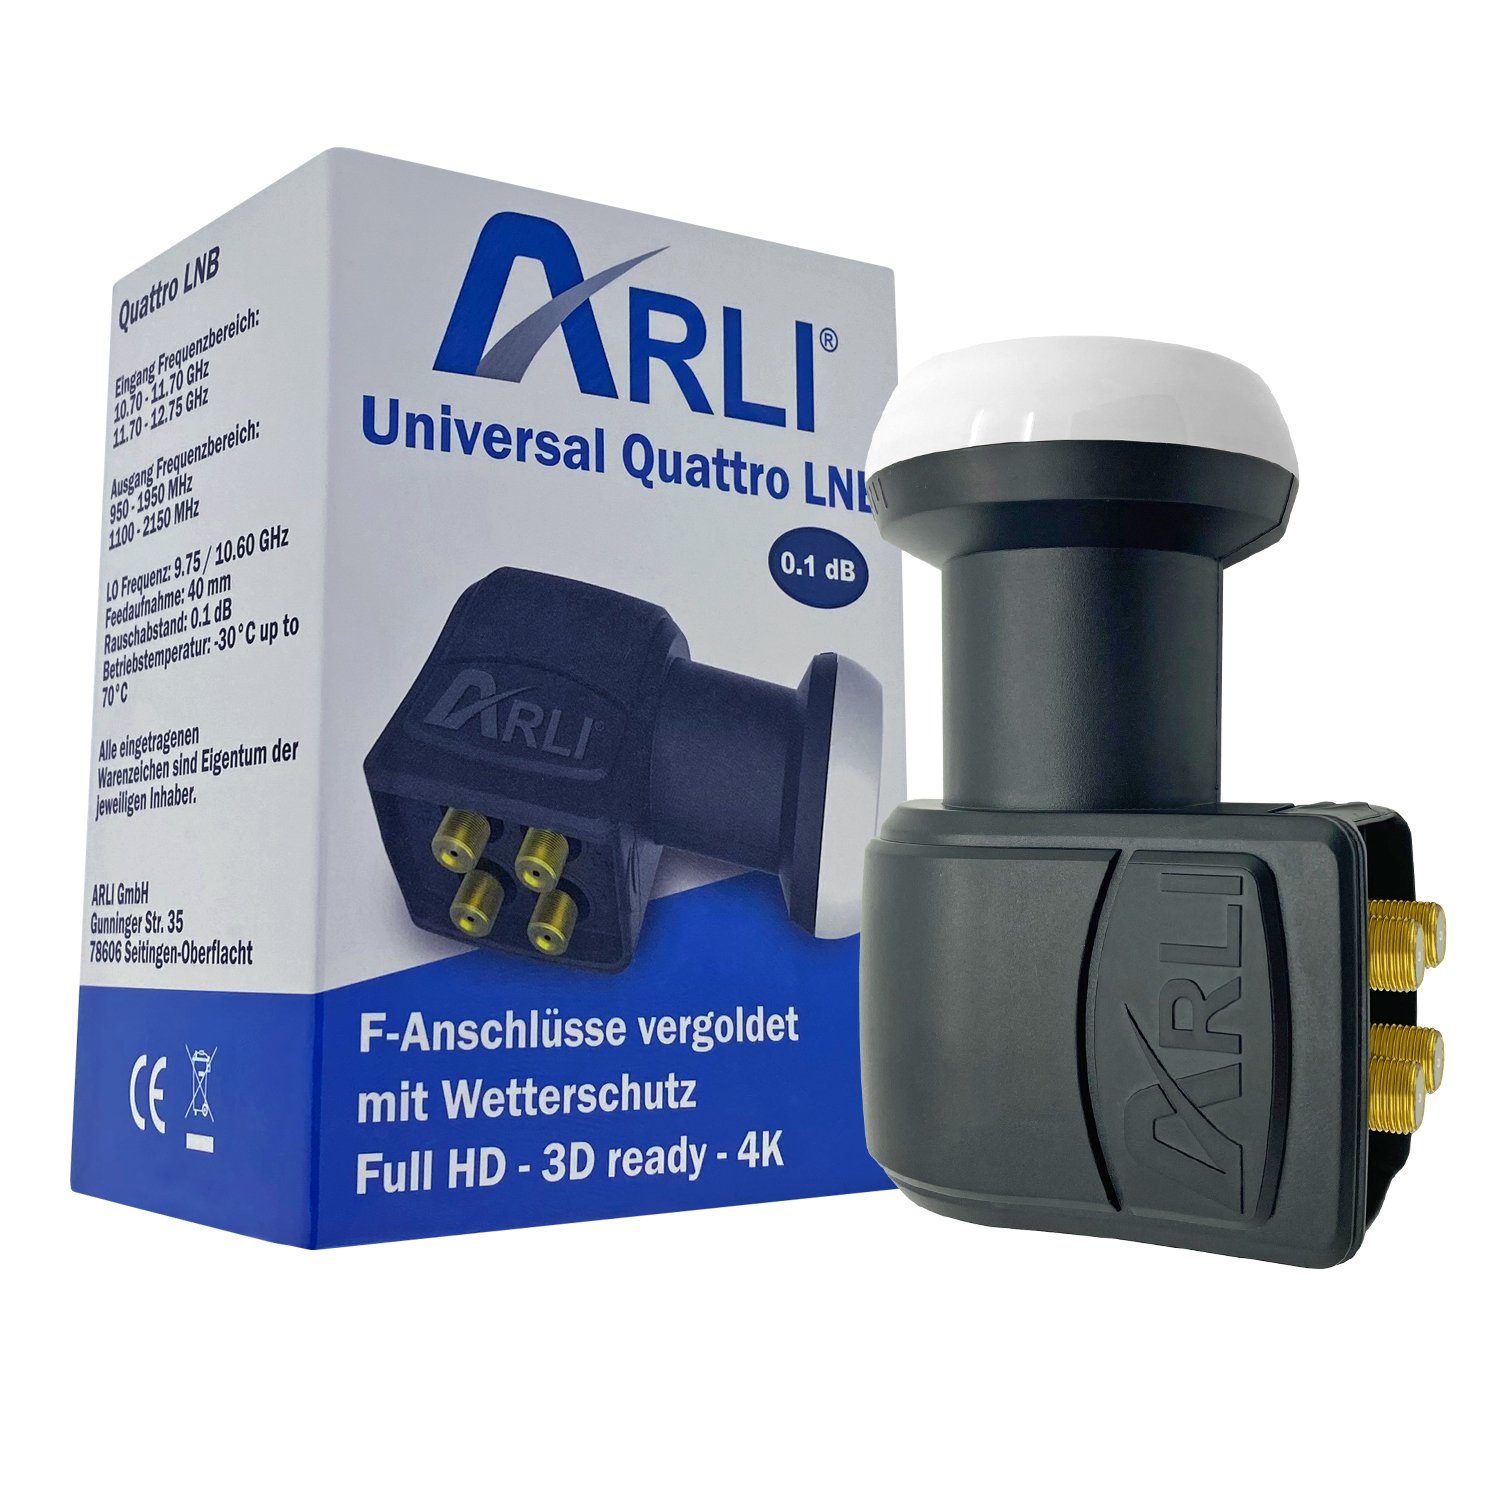 ARLI Universal Quattro LNB 0.1dB für Multischalter Universal-Quattro-LNB (für 4 Teilnehmer) Schwarz - 1 Stück